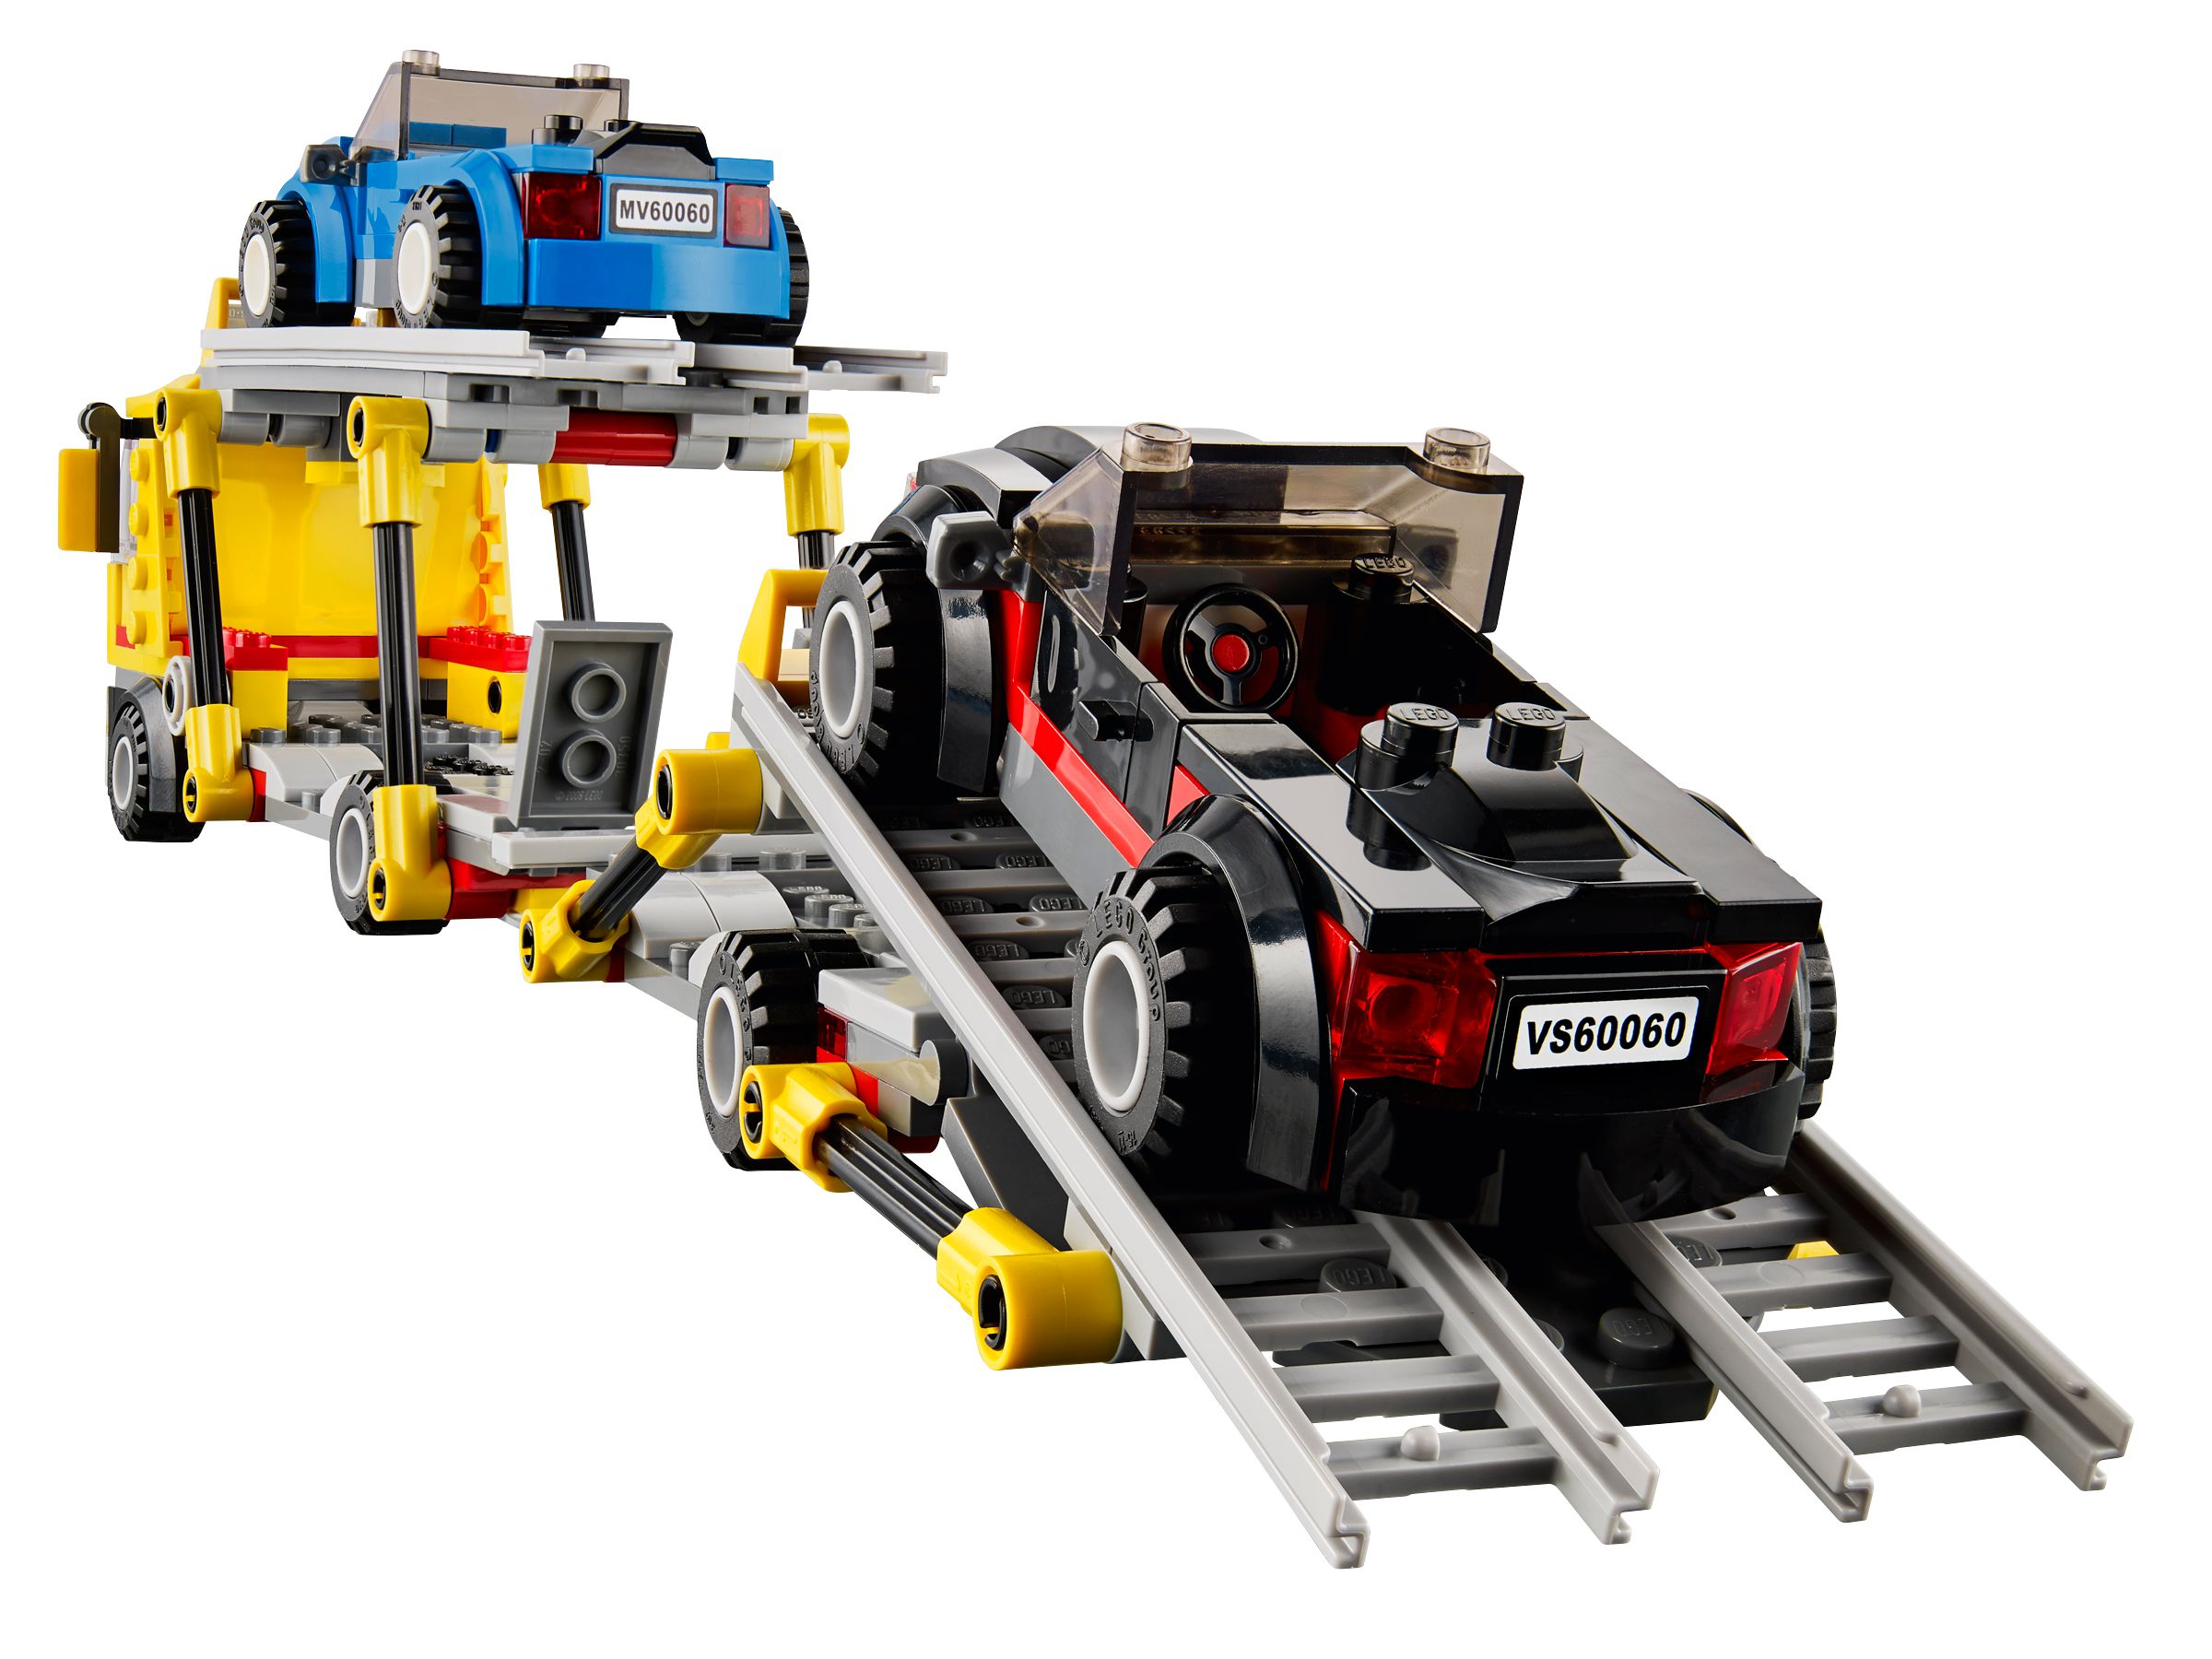 LEGO City 60060 Autotransporter LEGO_60060_alt4.jpg